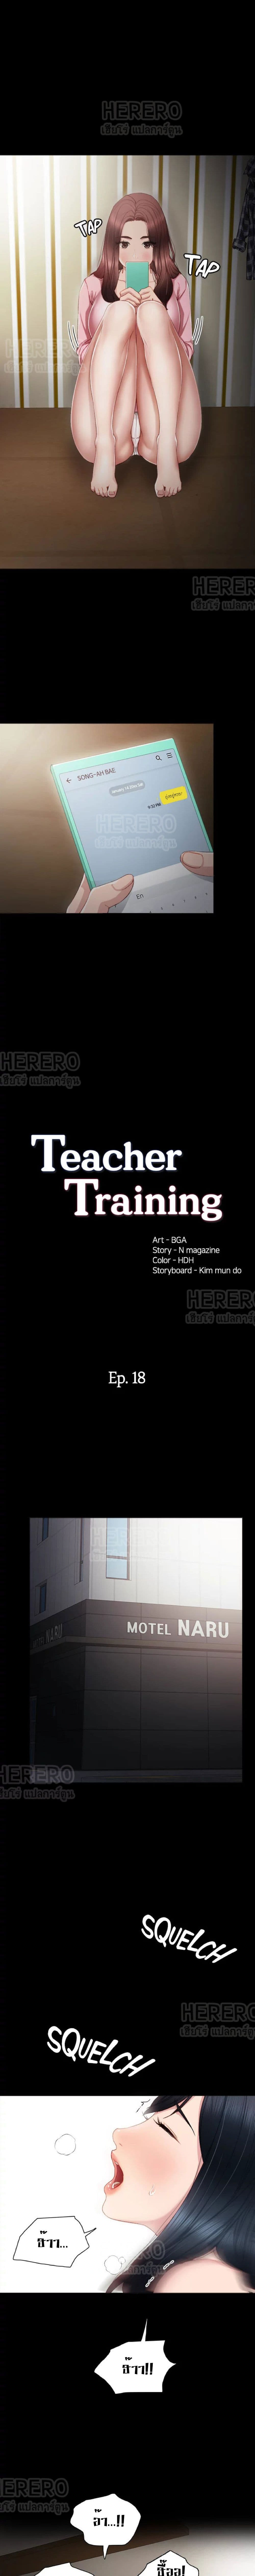 Teaching Practice 18 (2)